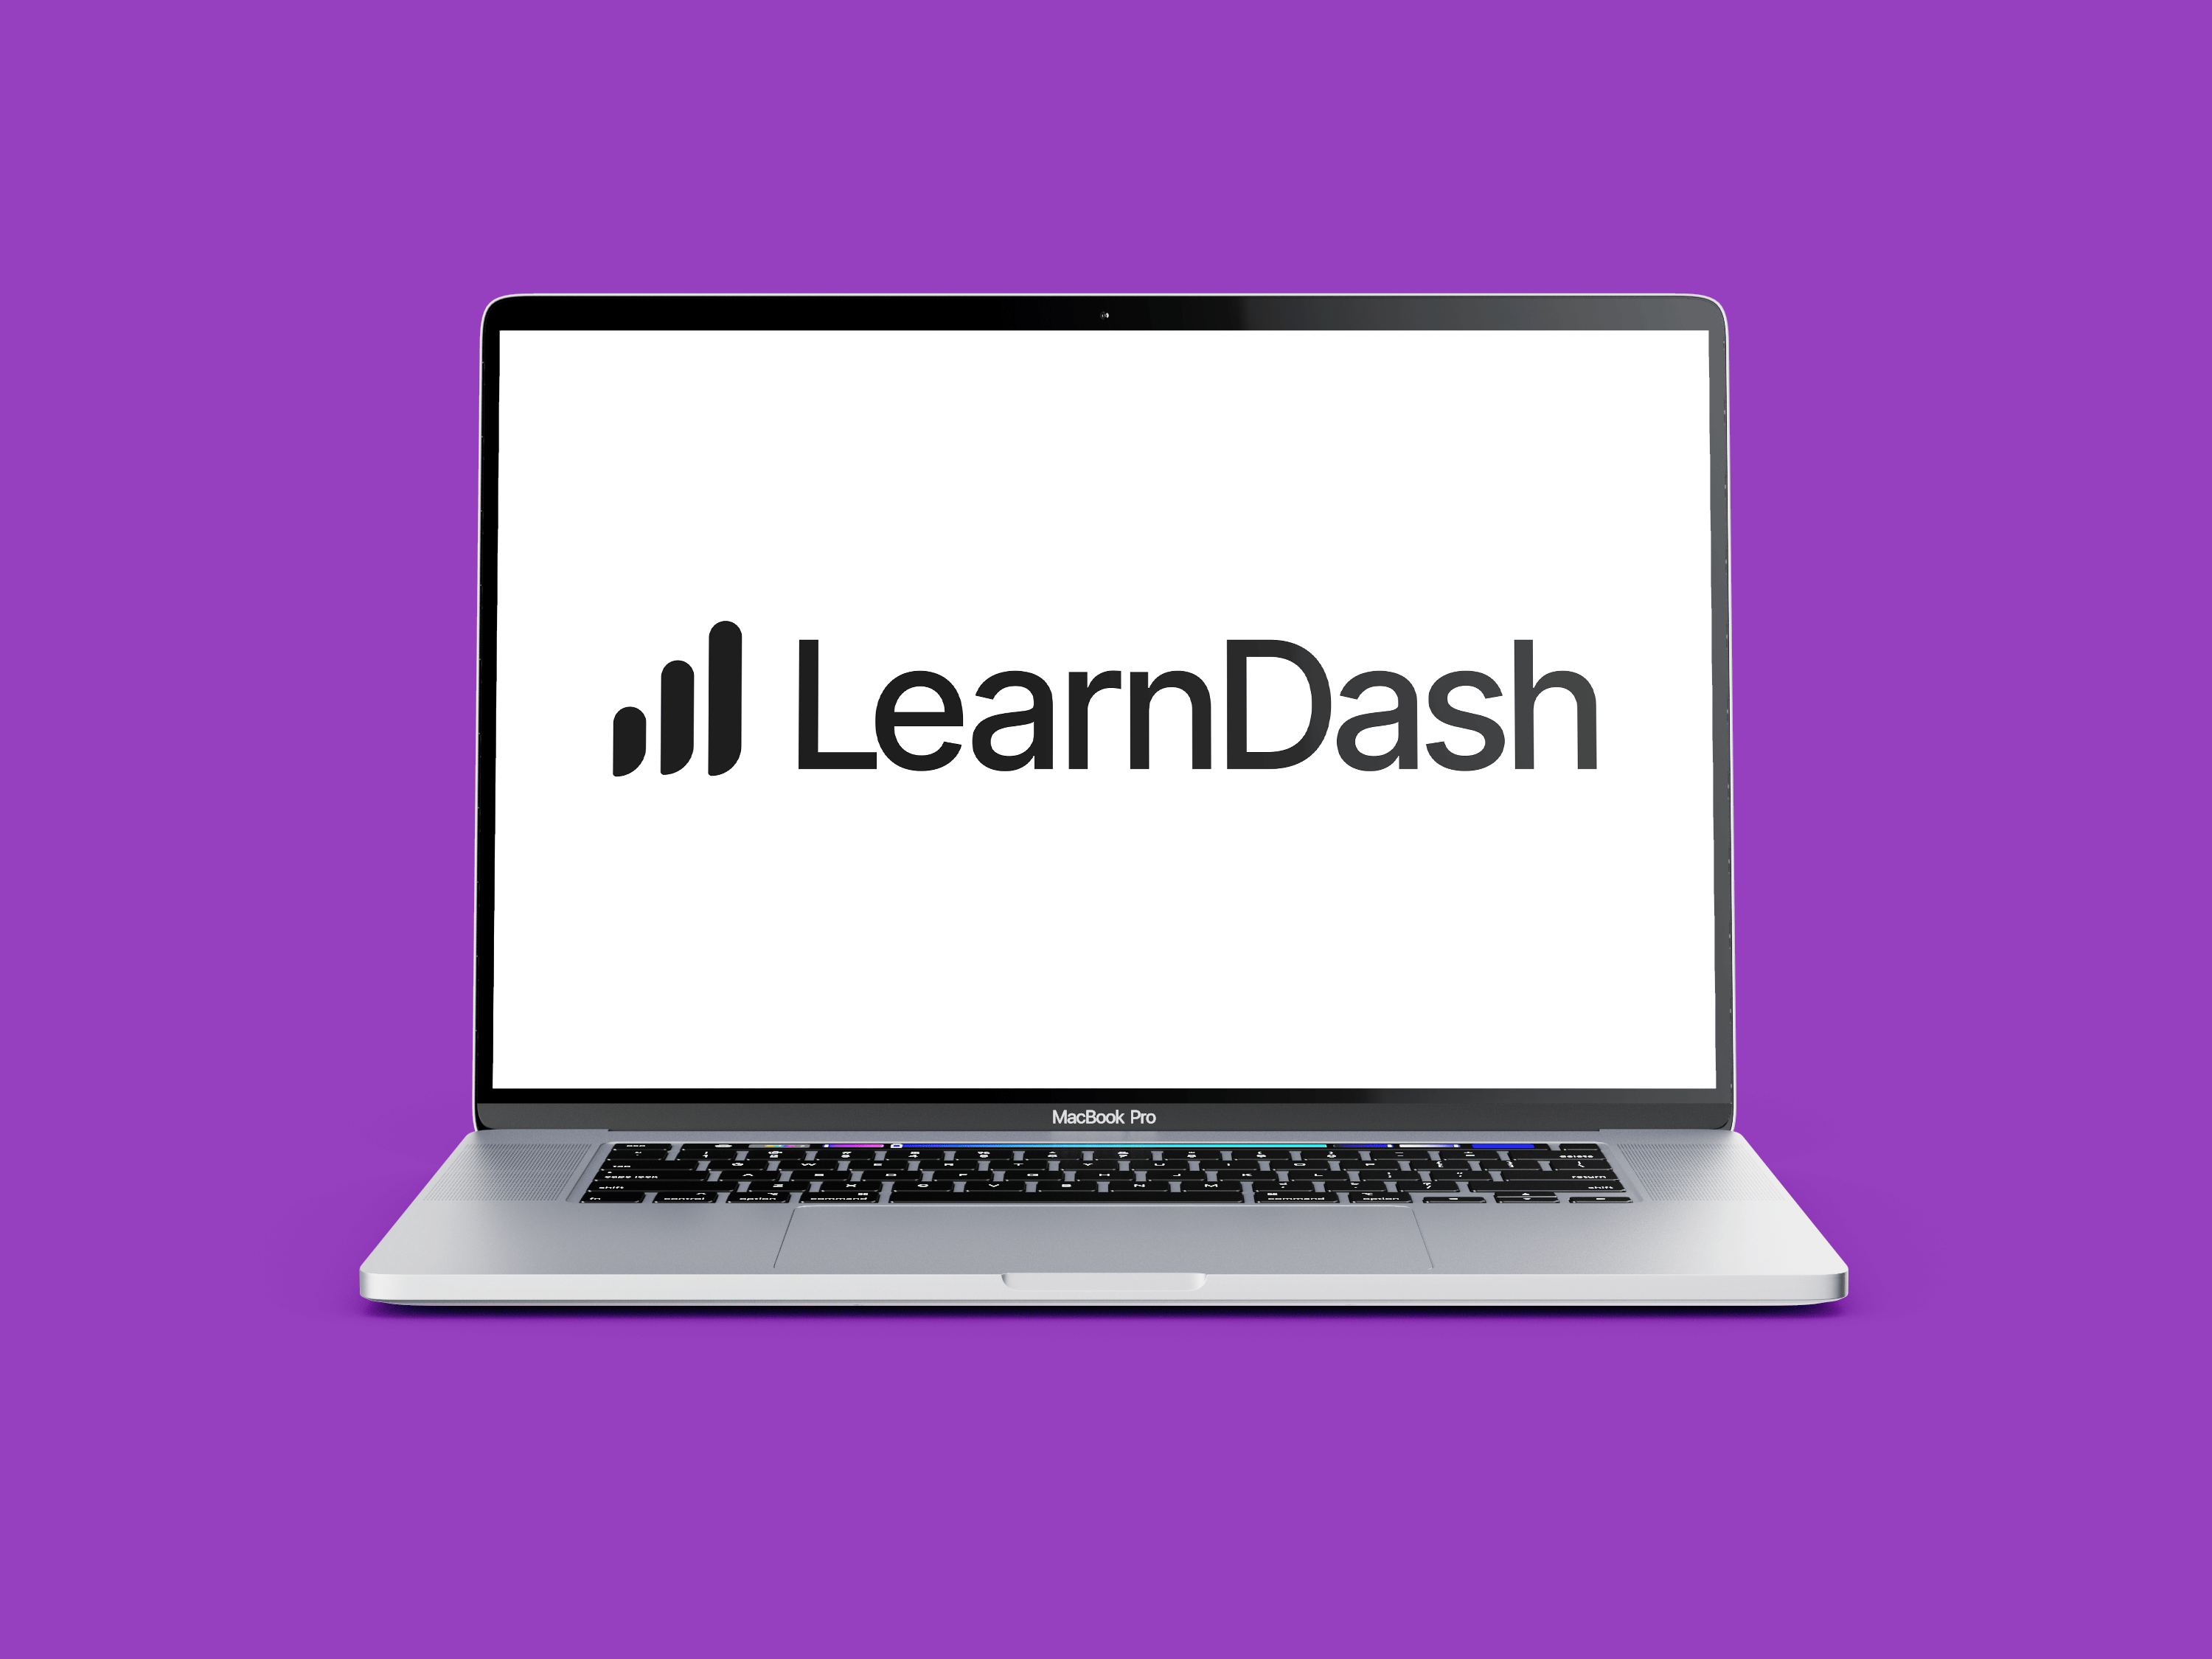 Learndash logo on Macbook